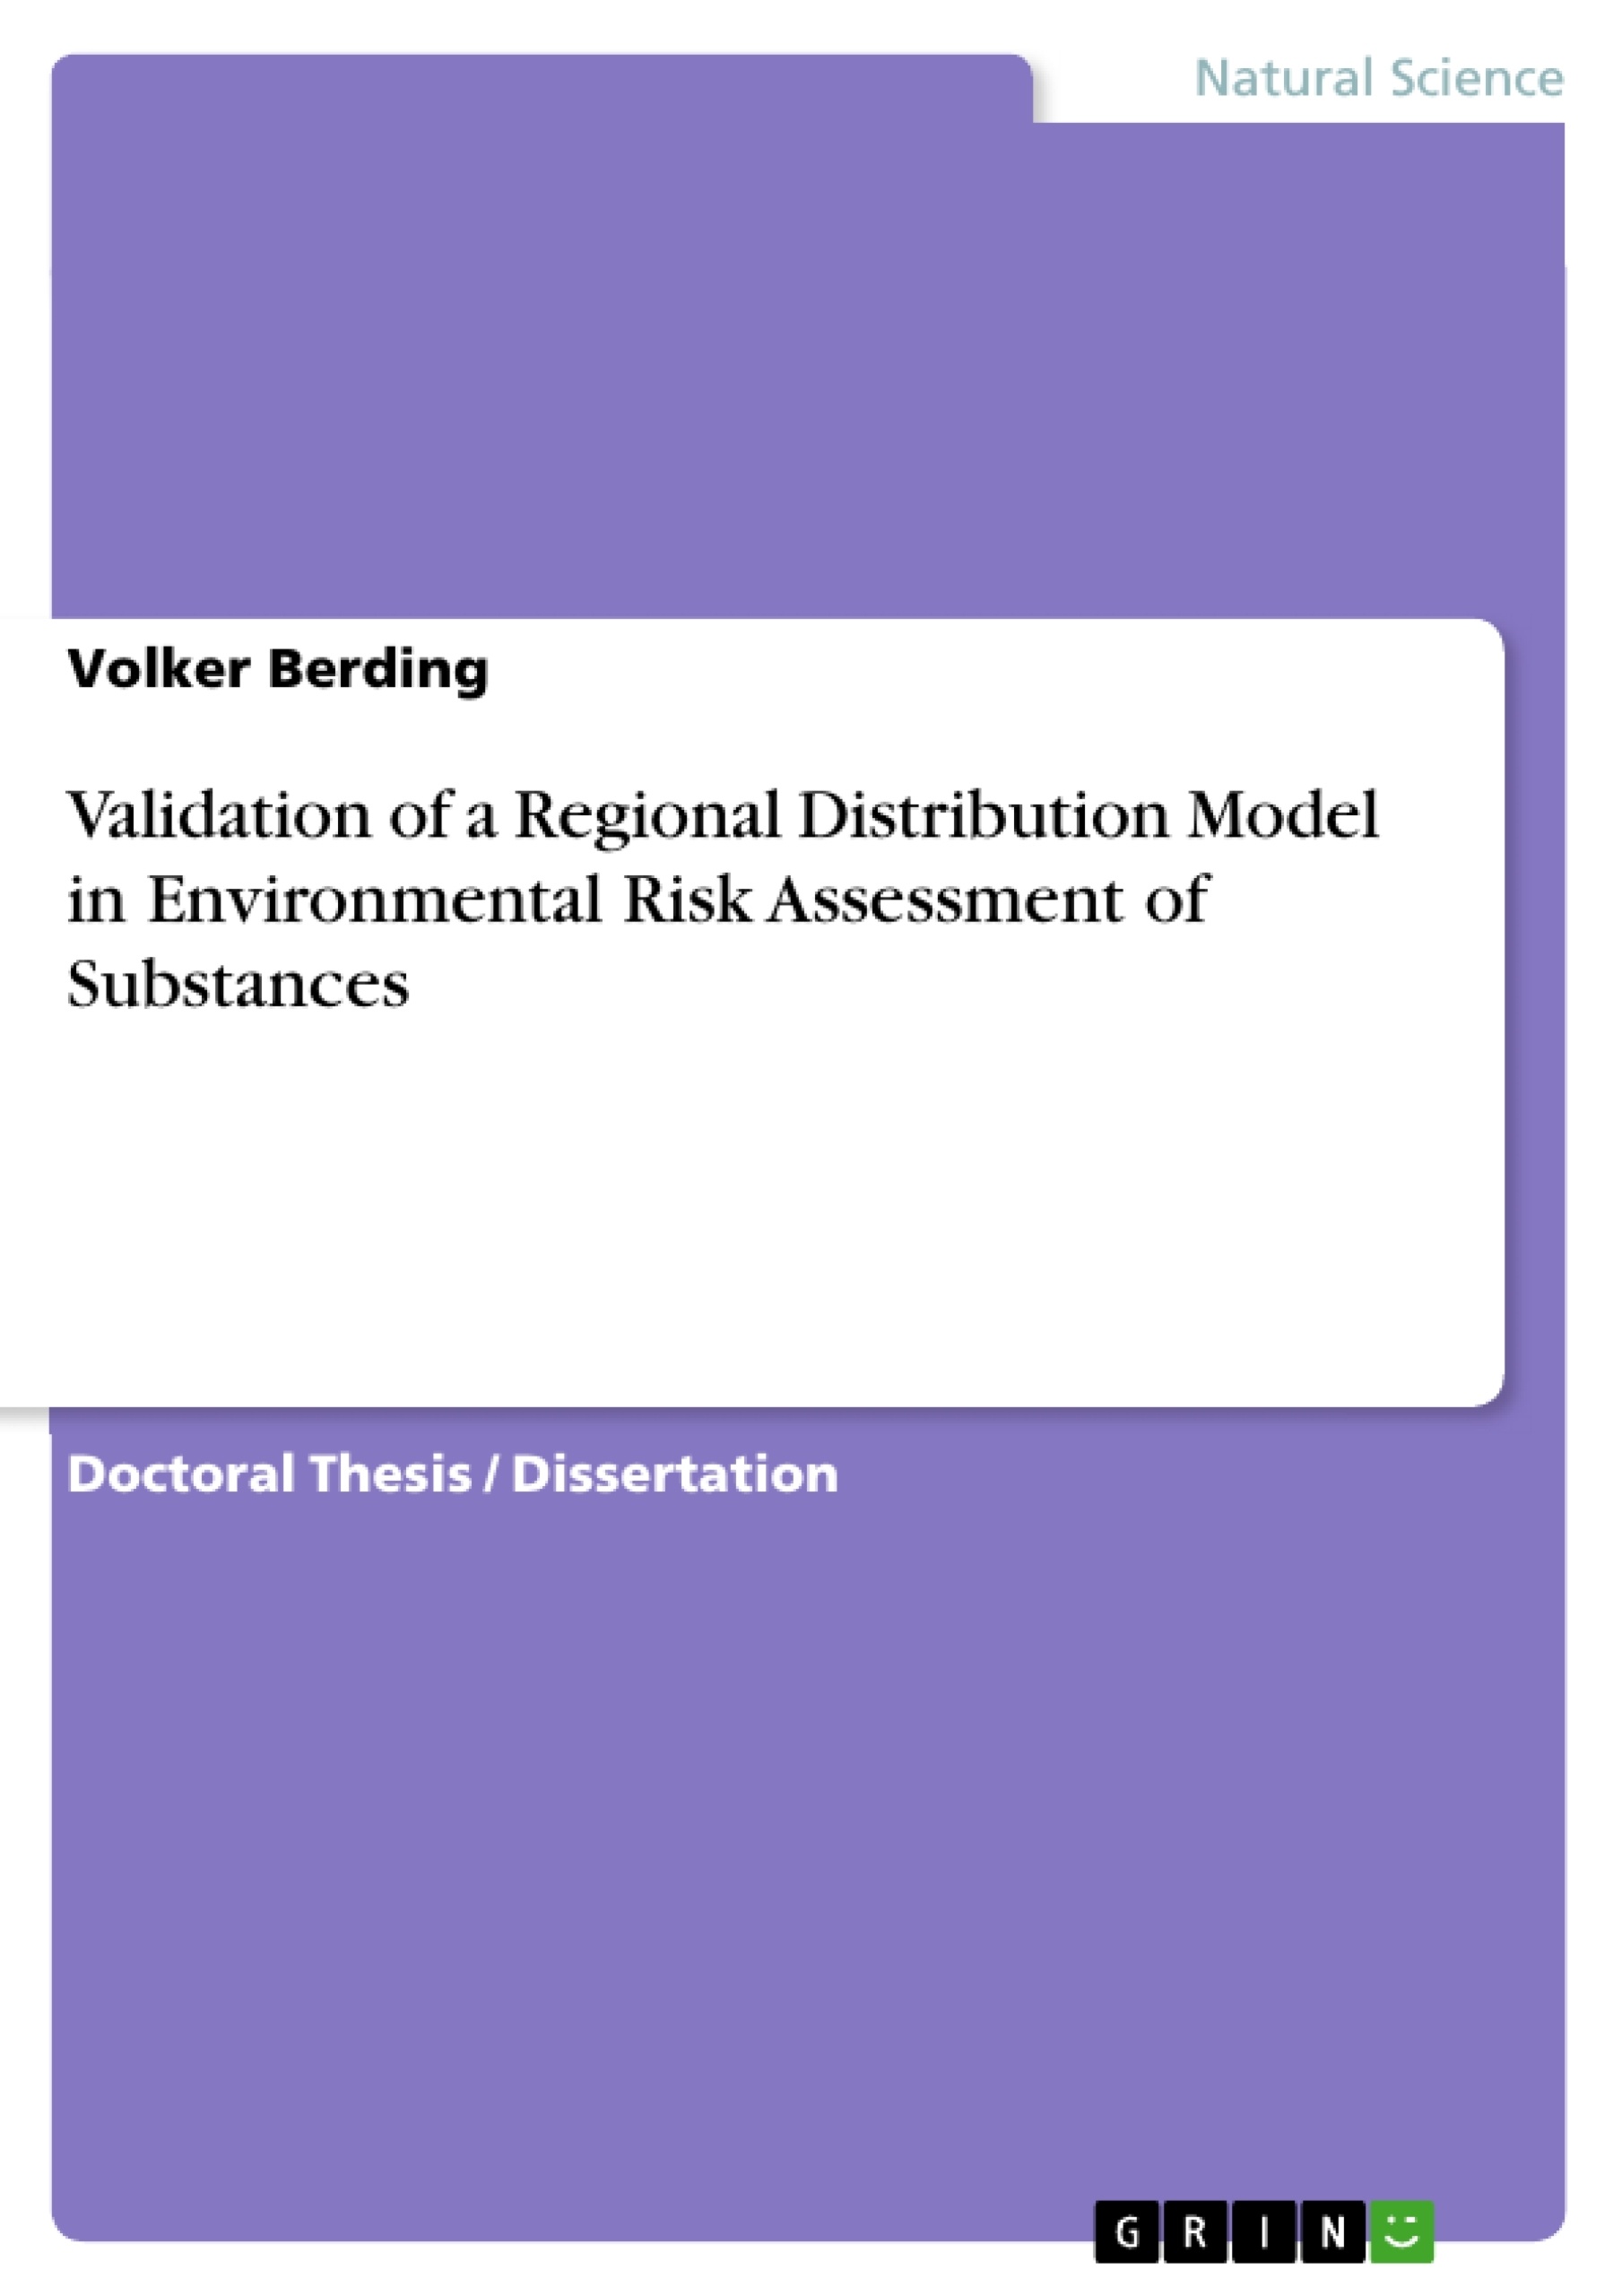 Titre: Validation of a Regional Distribution Model in Environmental Risk Assessment of Substances